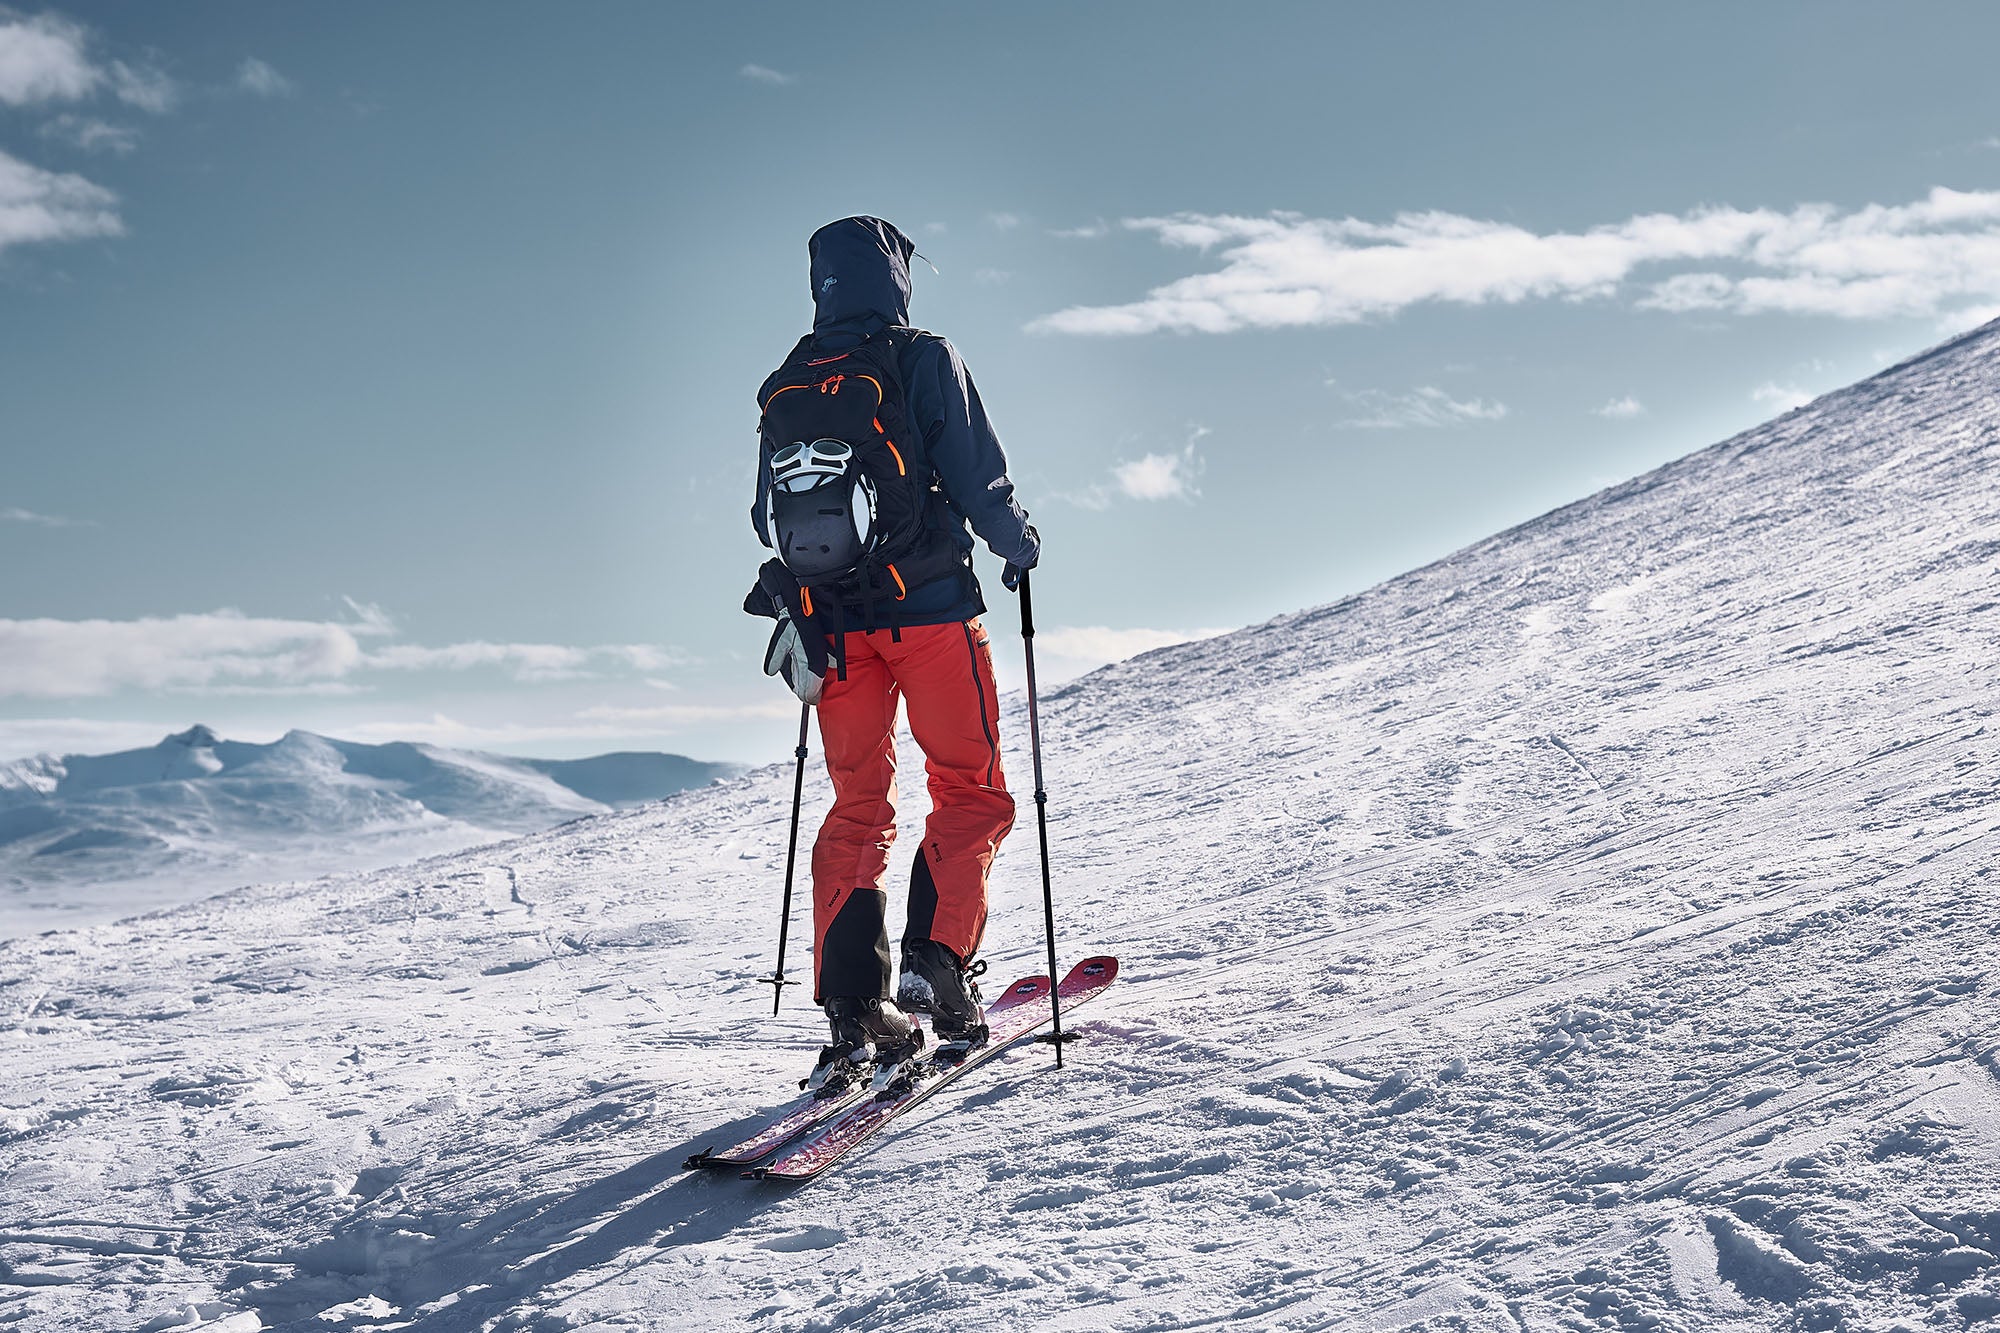 Louis Vuitton Masque De Ski Goggles - Black Snow Gear, Sports